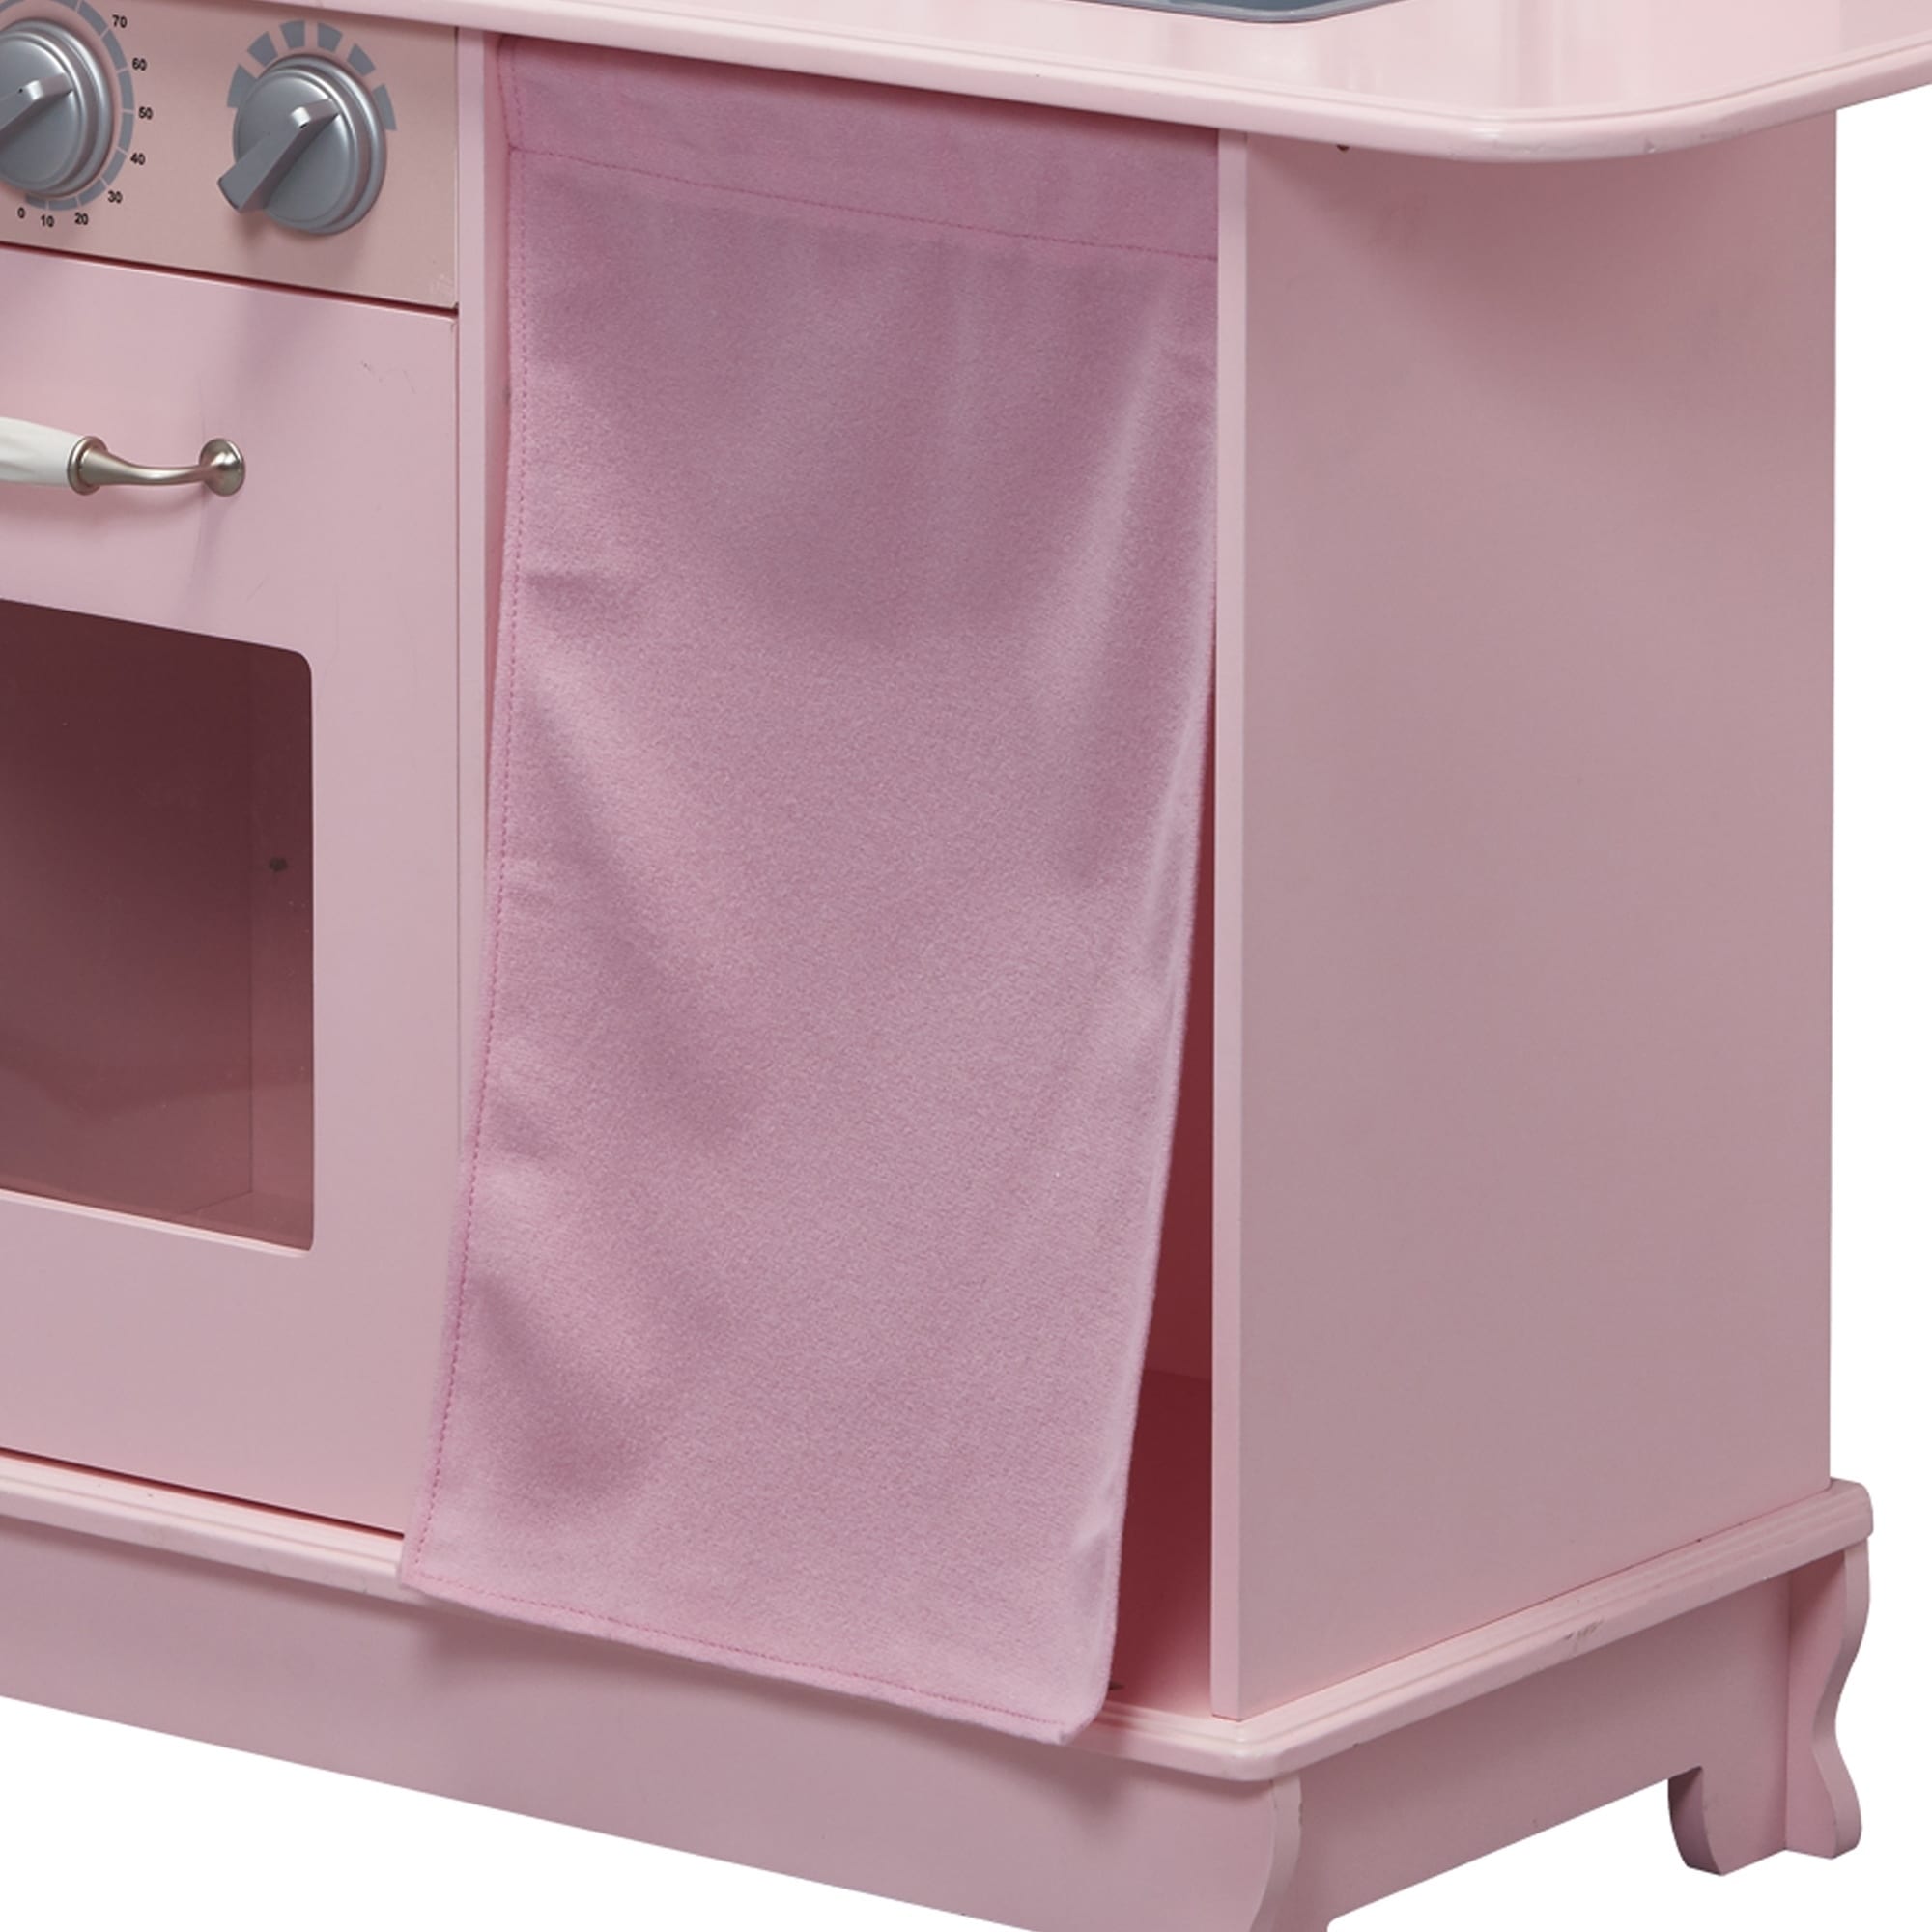 Teamson Kids Sunday Brunch Wooden Play Kitchen - Pink - image 3 of 6